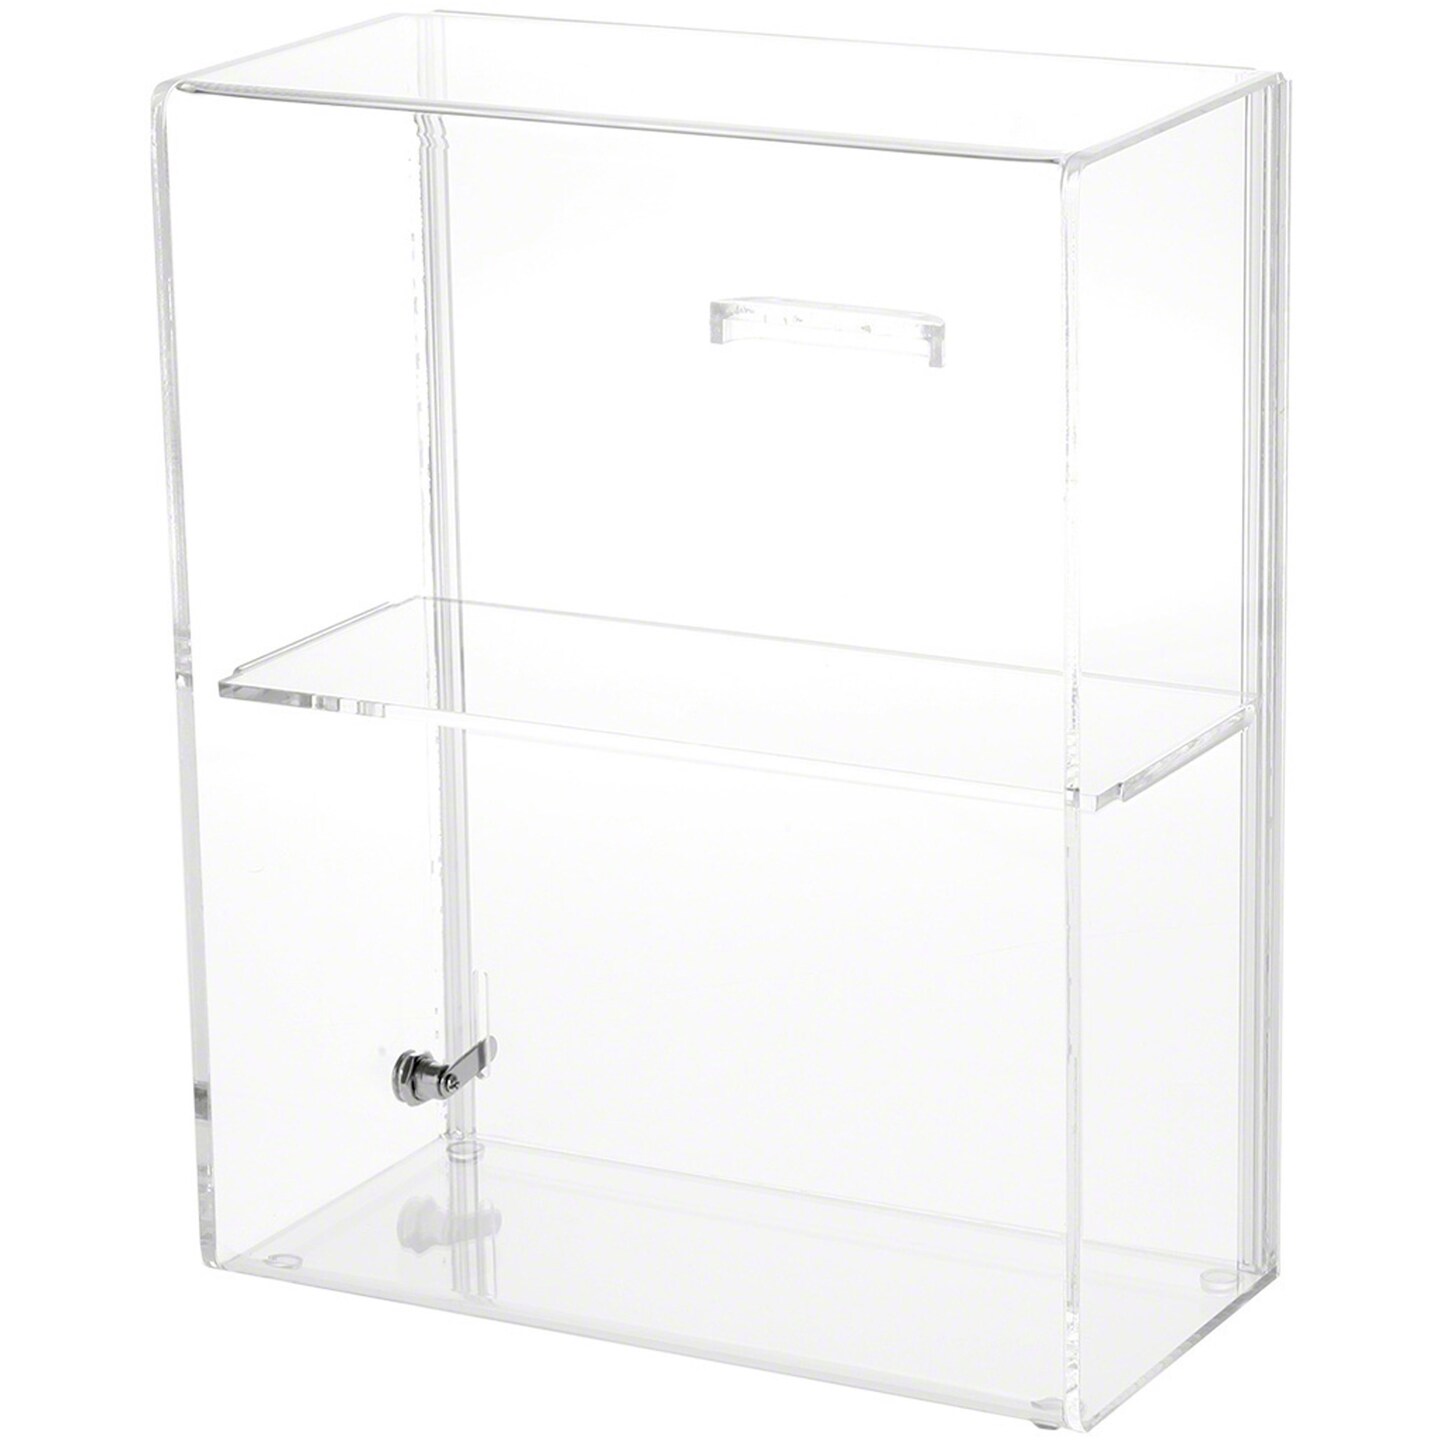 Plymor Clear Acrylic Sliding Door Locking Display Case, 1 Shelf